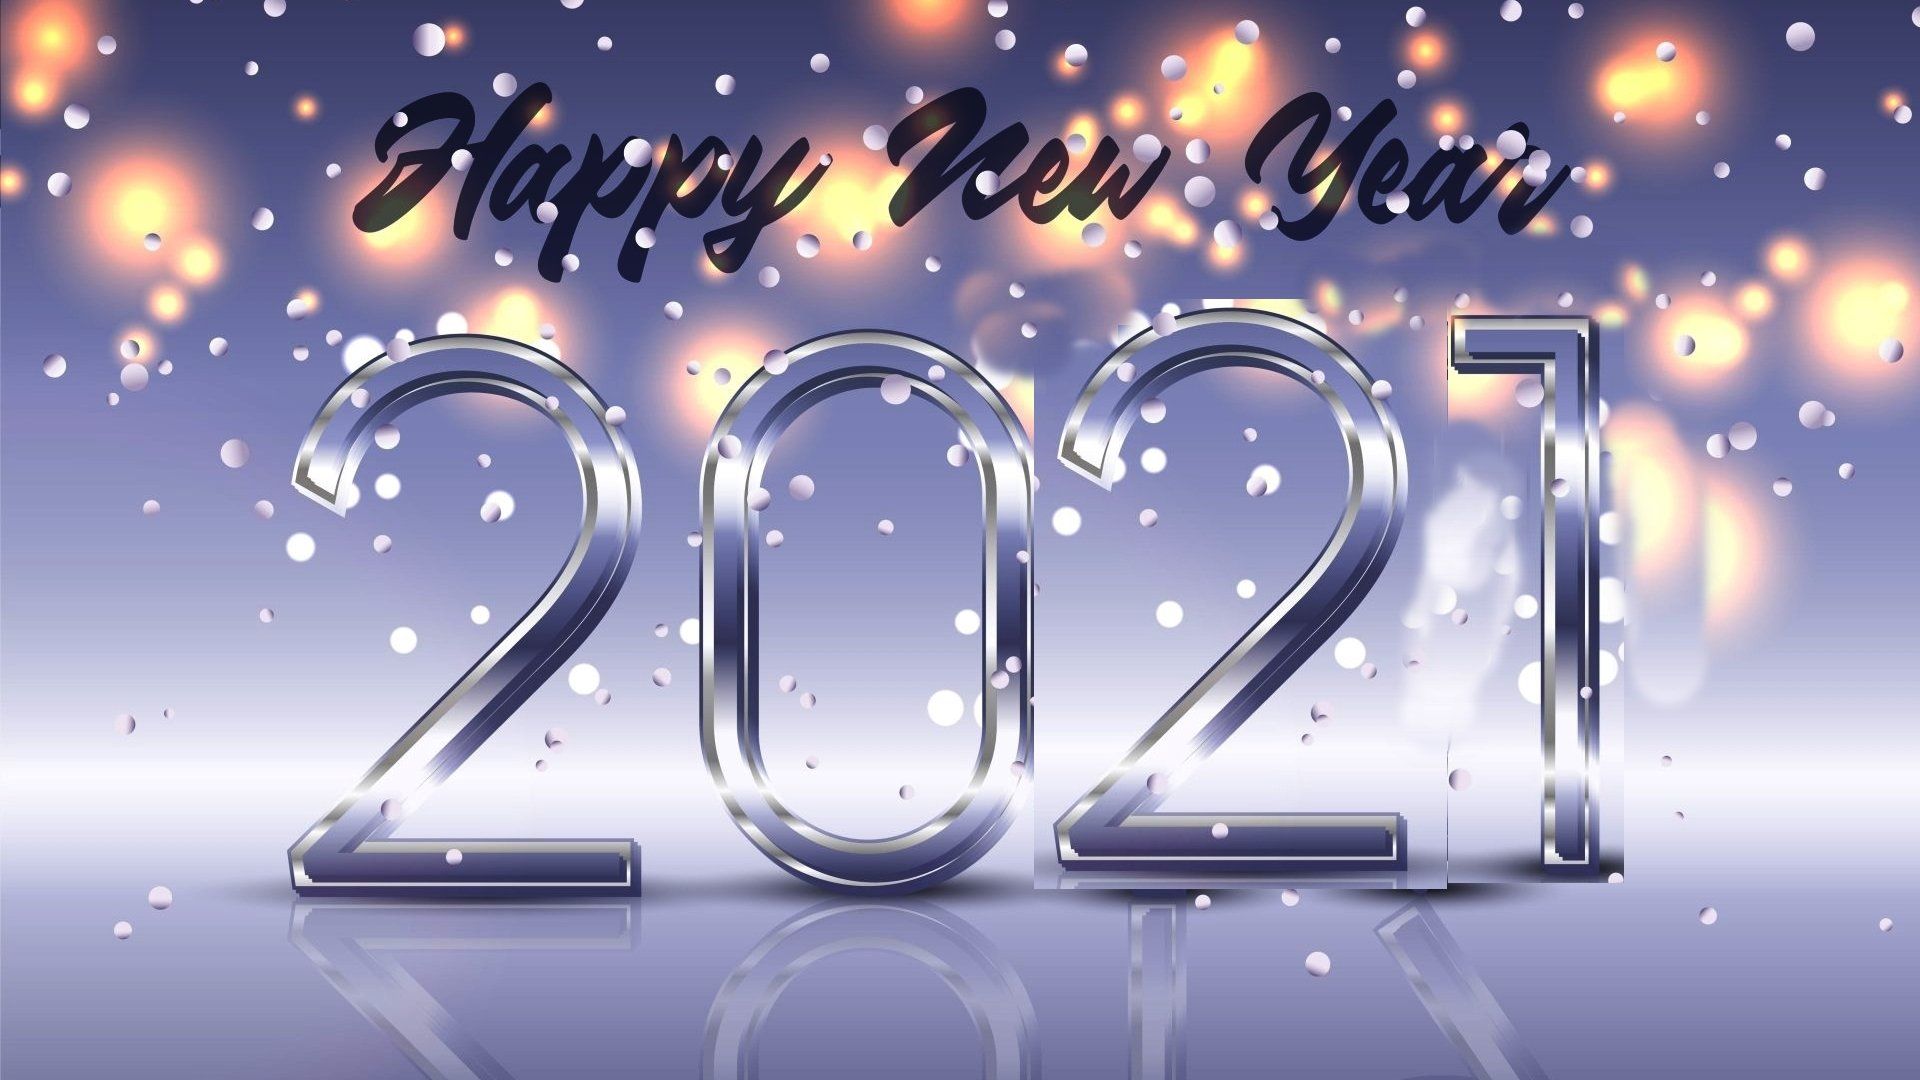 Silver Shining New Year 2021 Wallpaper 72653